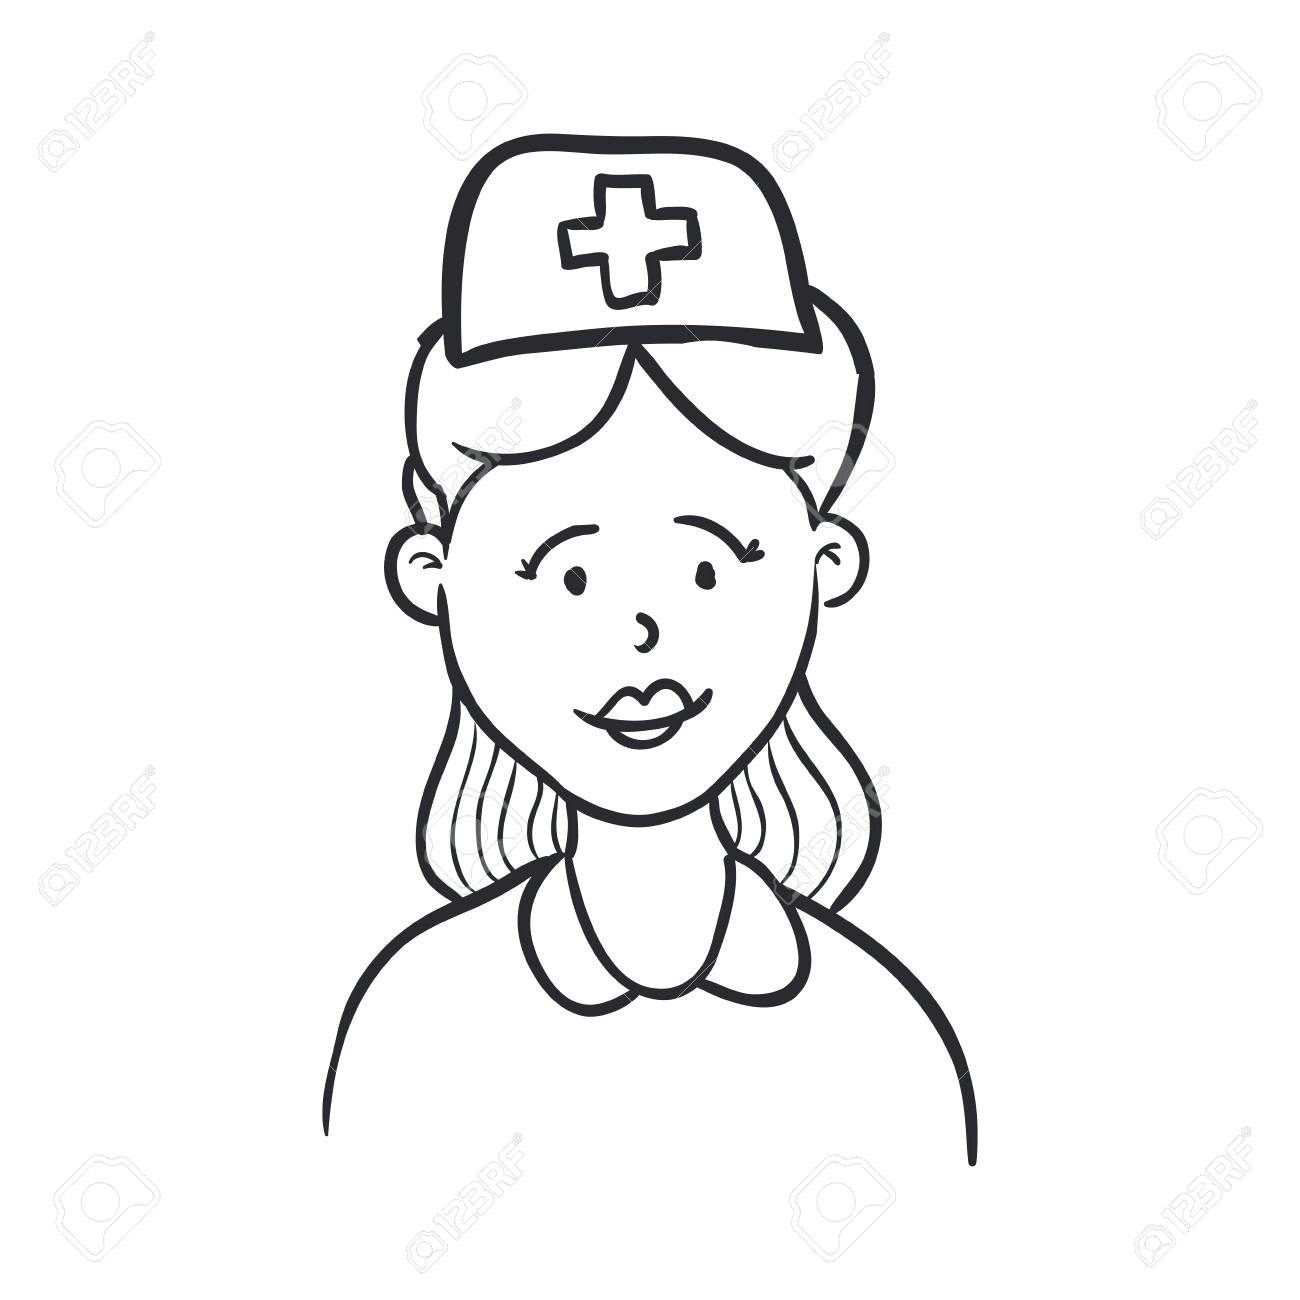 Cartoon Drawing Nurse Nurse Cartoon Drawing at Getdrawings Com Free for Personal Use